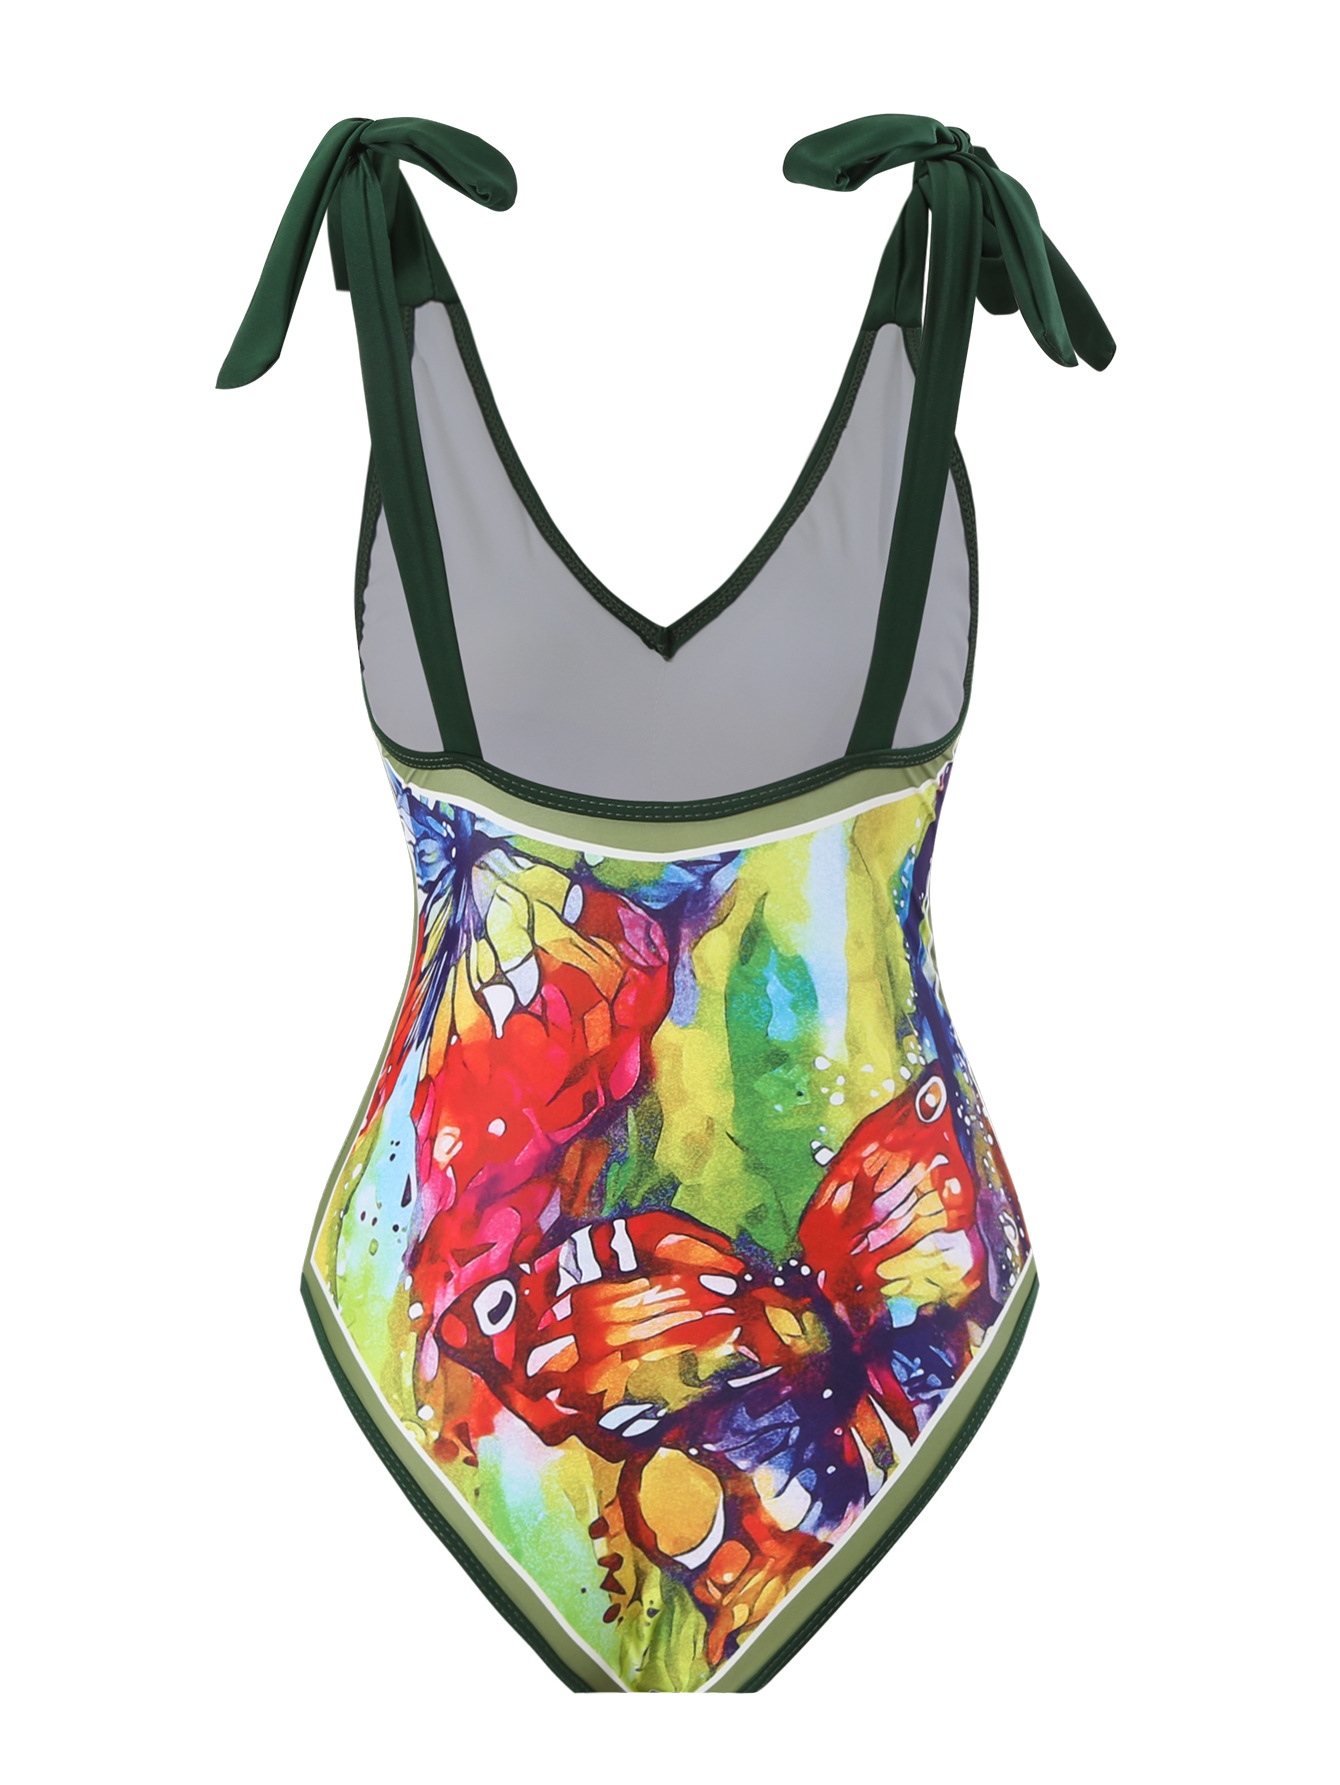 QL202402--Women's printed conservative swimsuit bikini